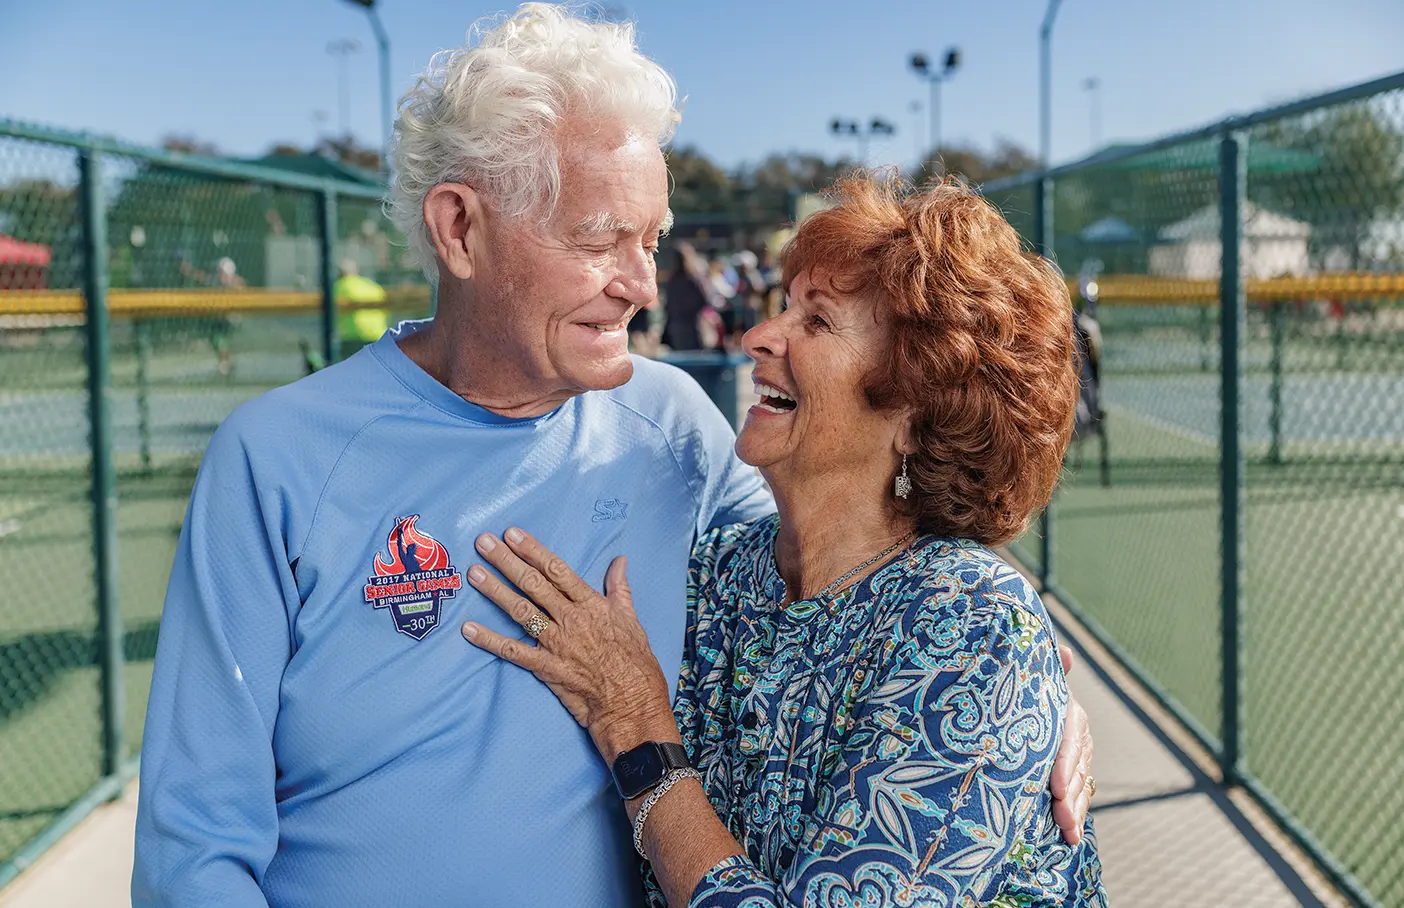 Richard E. Johnson and his wife, Lawana, embrace outside a pickle ball court.